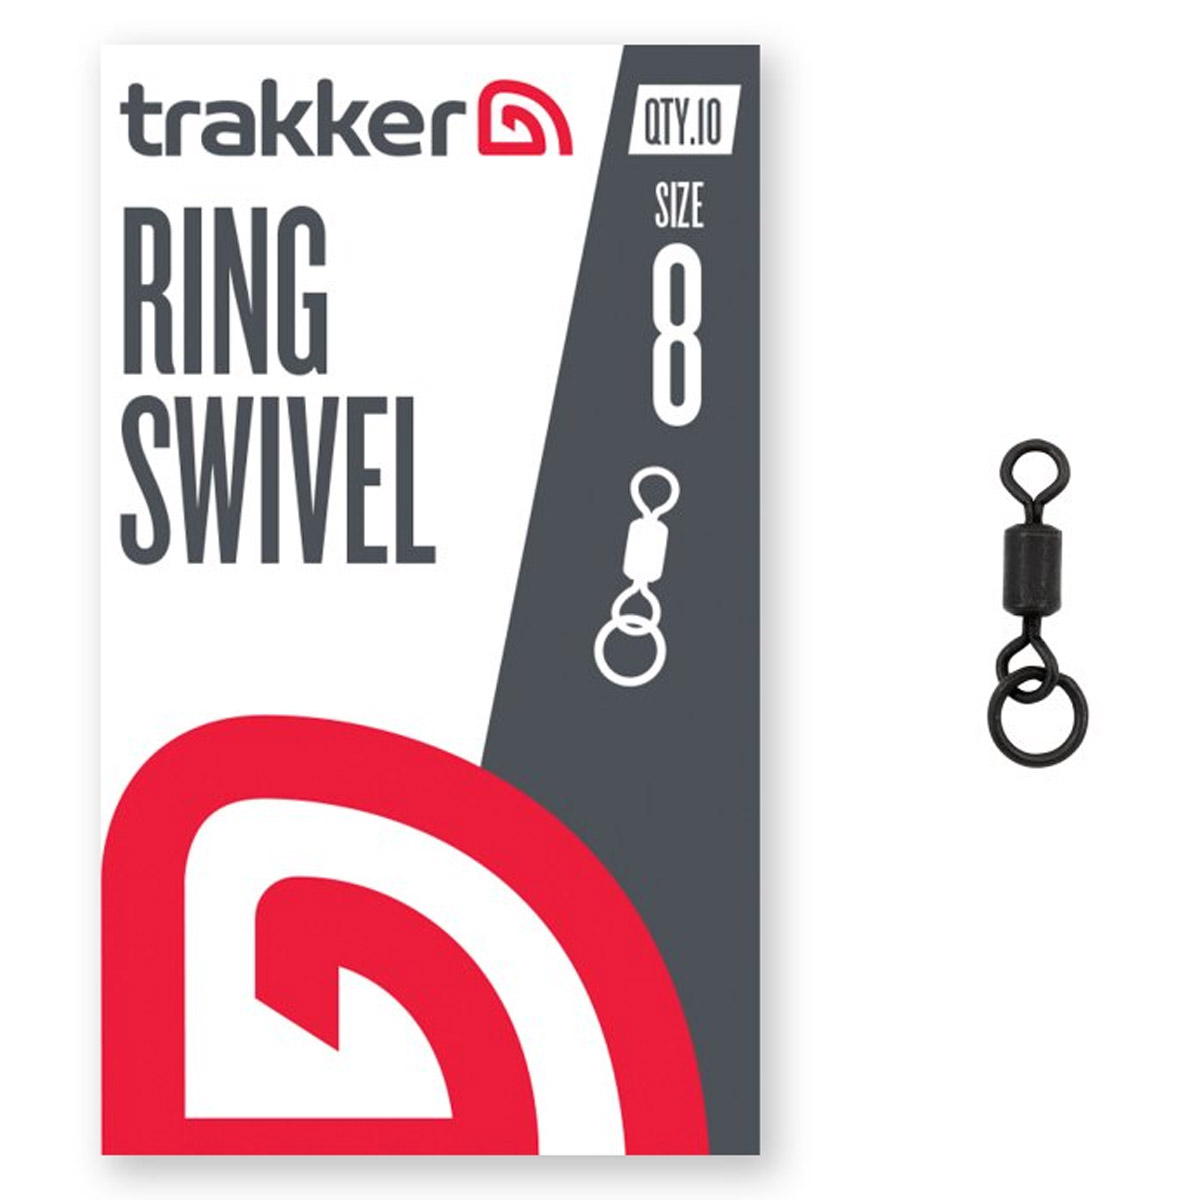 Trakker Ring Swivel - Size 8